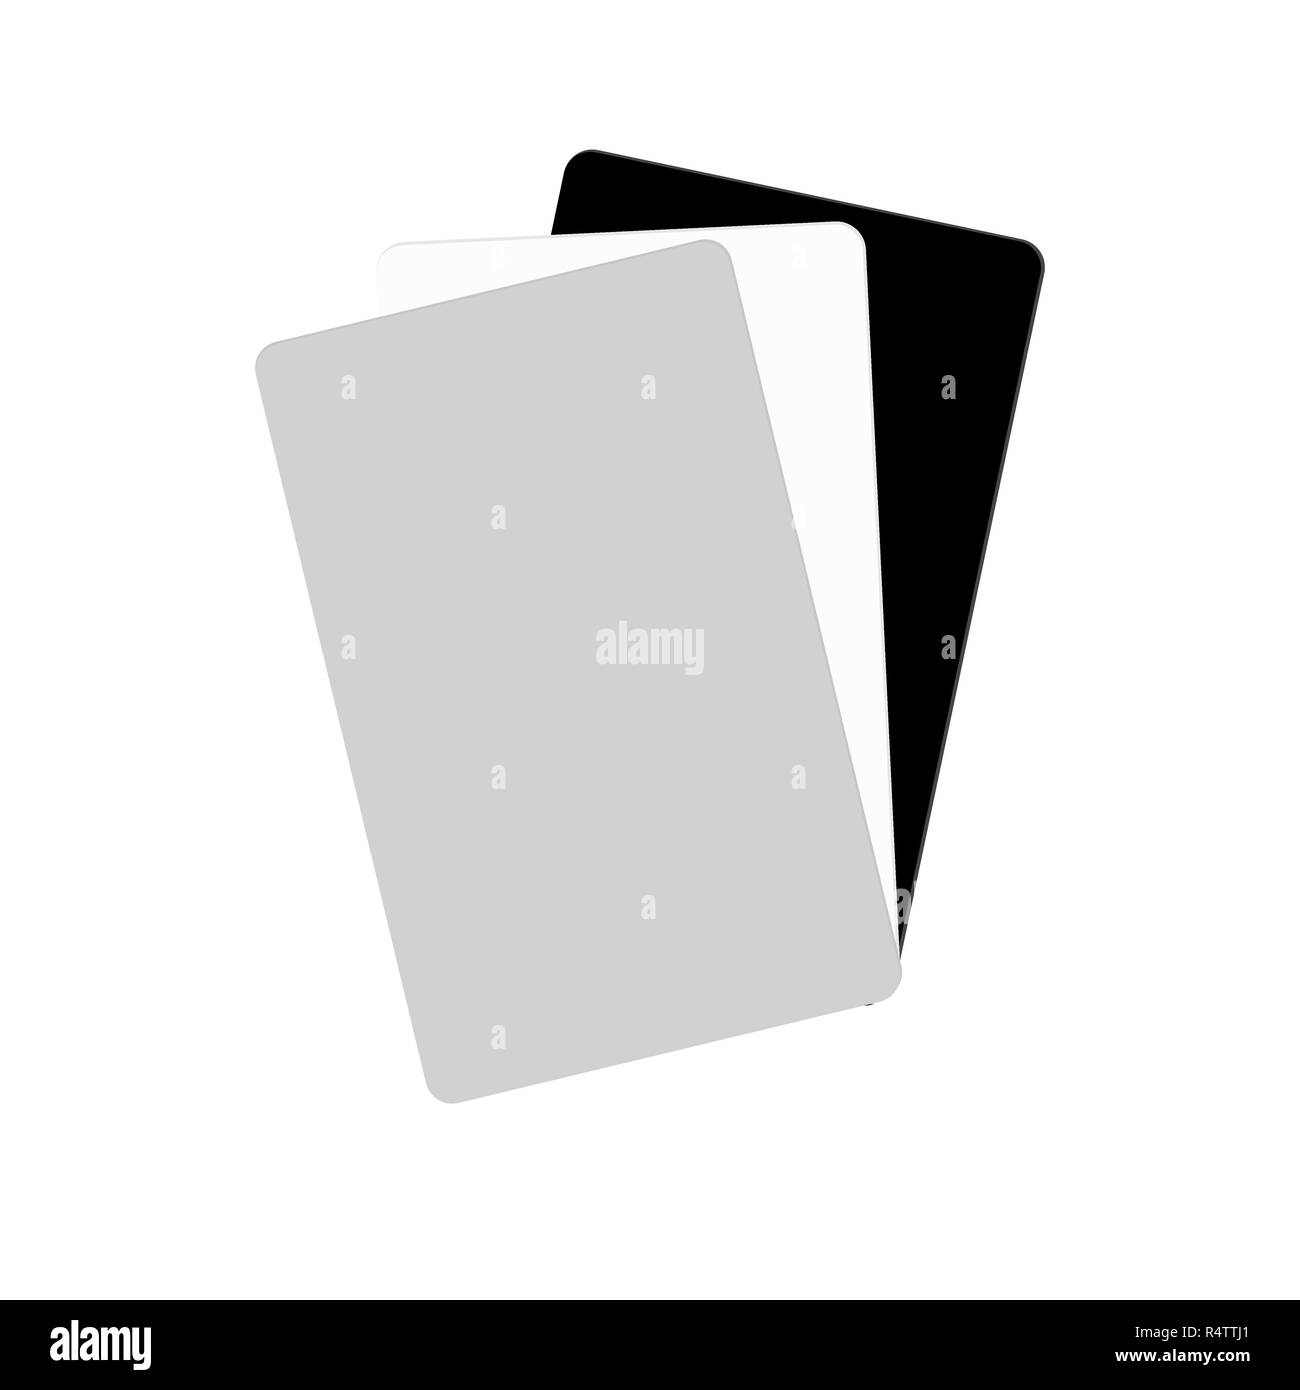 White balance card. 18 percent gray card sample. Stock Vector